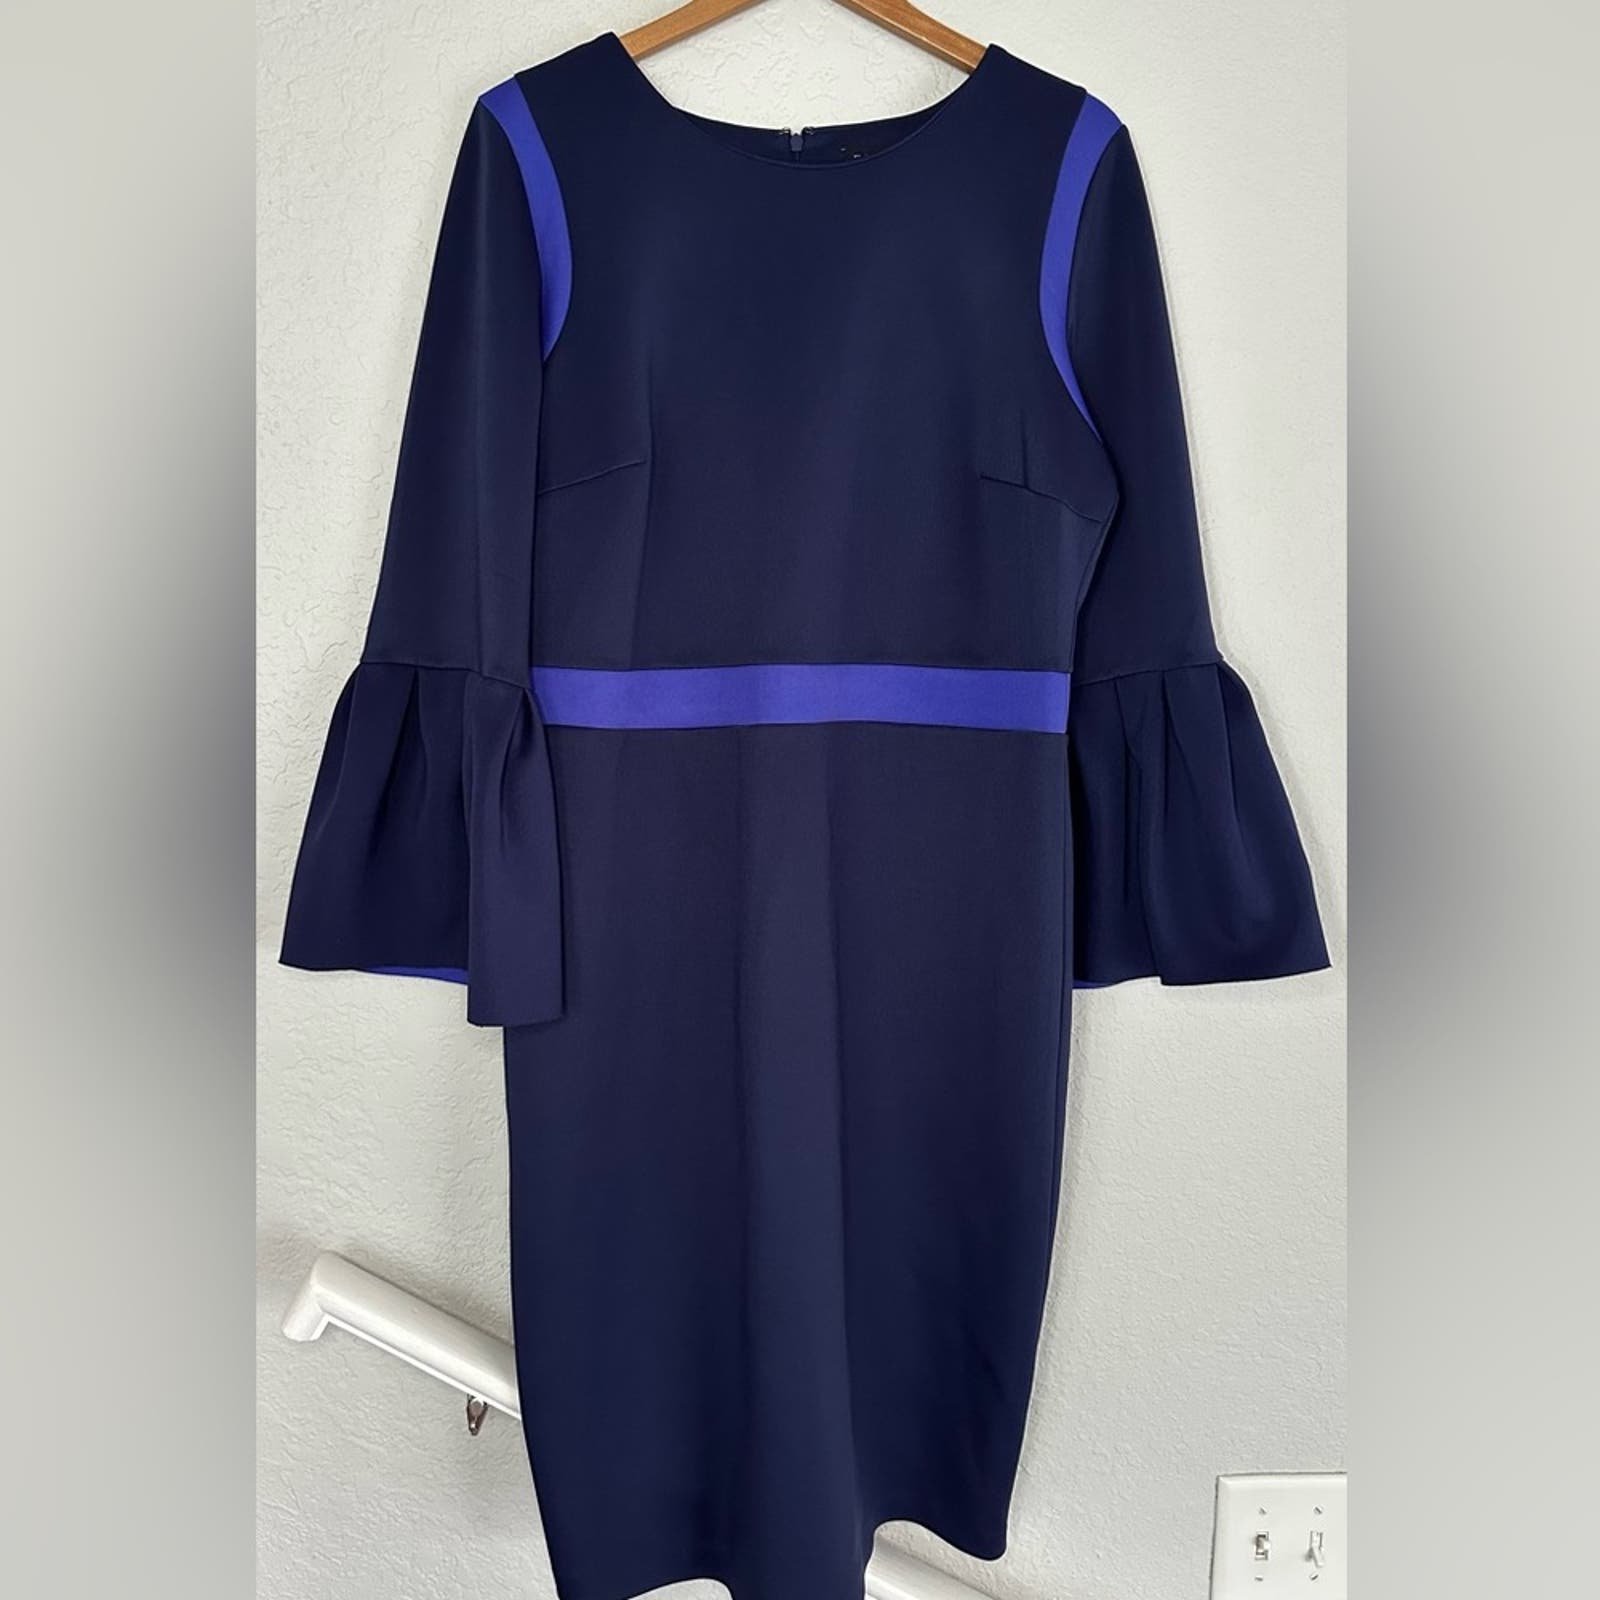 Eloquii NWOT Flare Sleeve Navy Blue Scuba Dress Size 18 5ew98nQWx